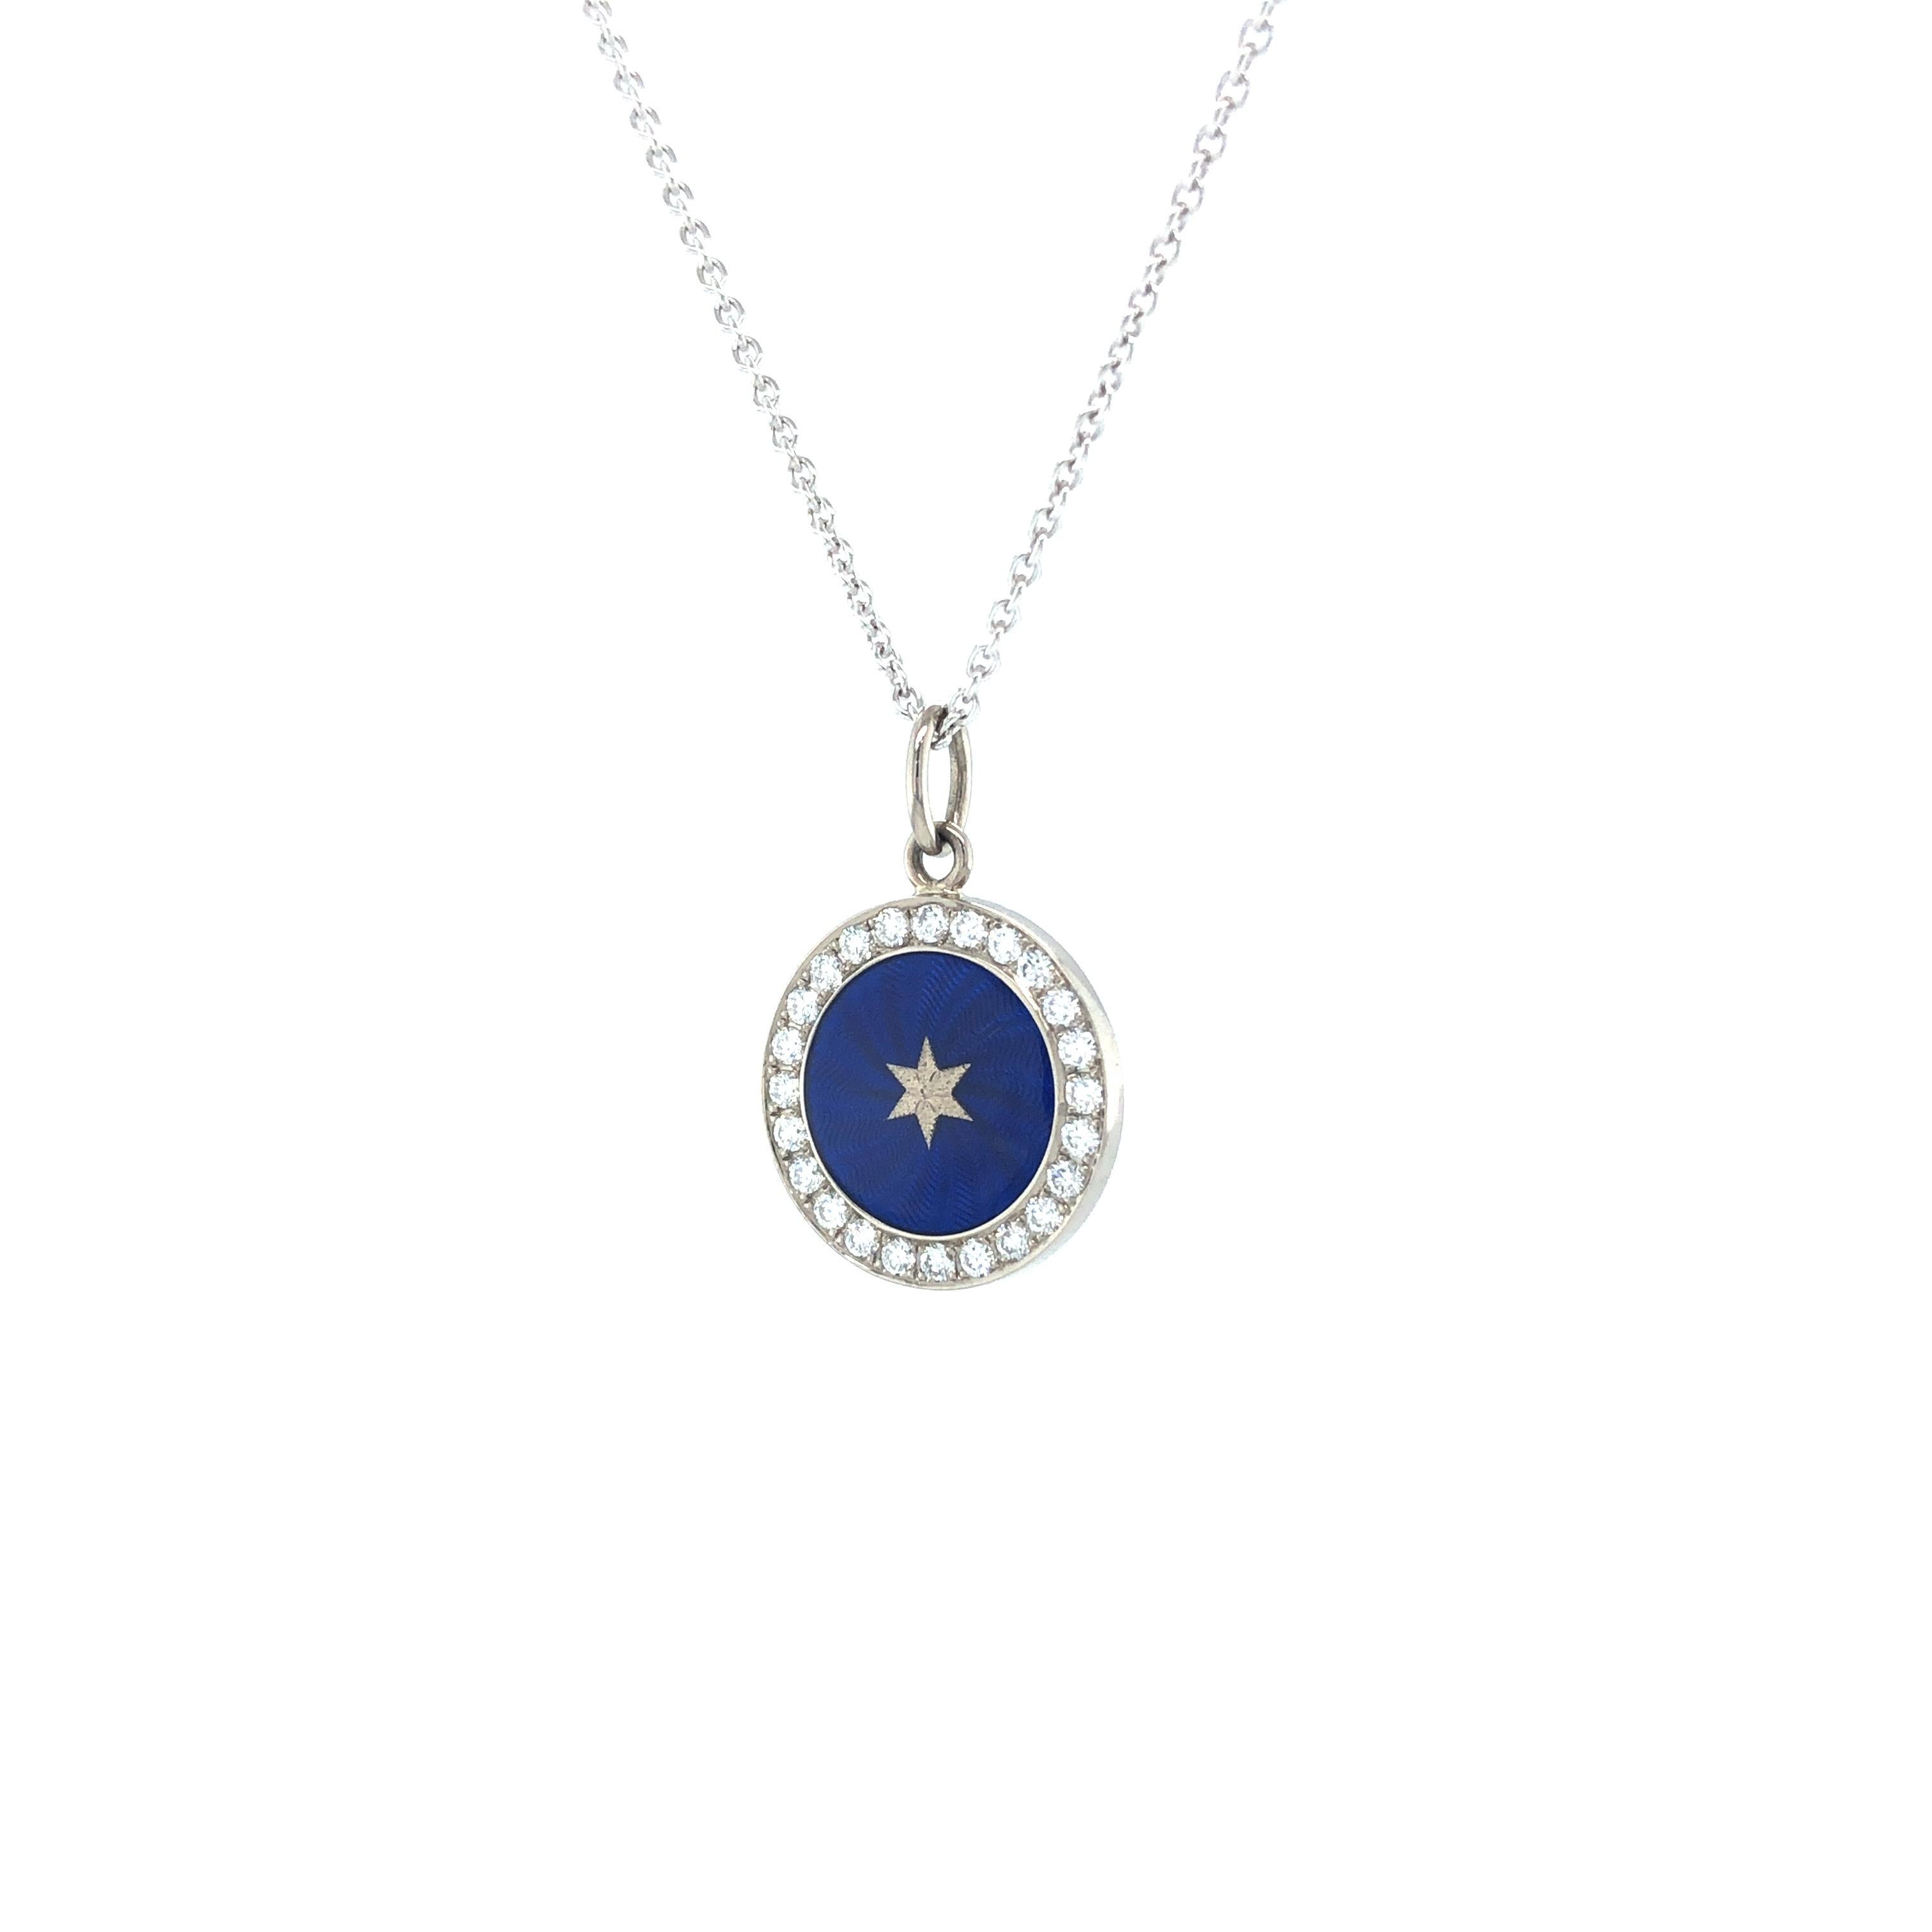 Pendant Necklace with Star 18k White Gold Blue Enamel 24 Diamonds 0.36 ct G VS For Sale 3